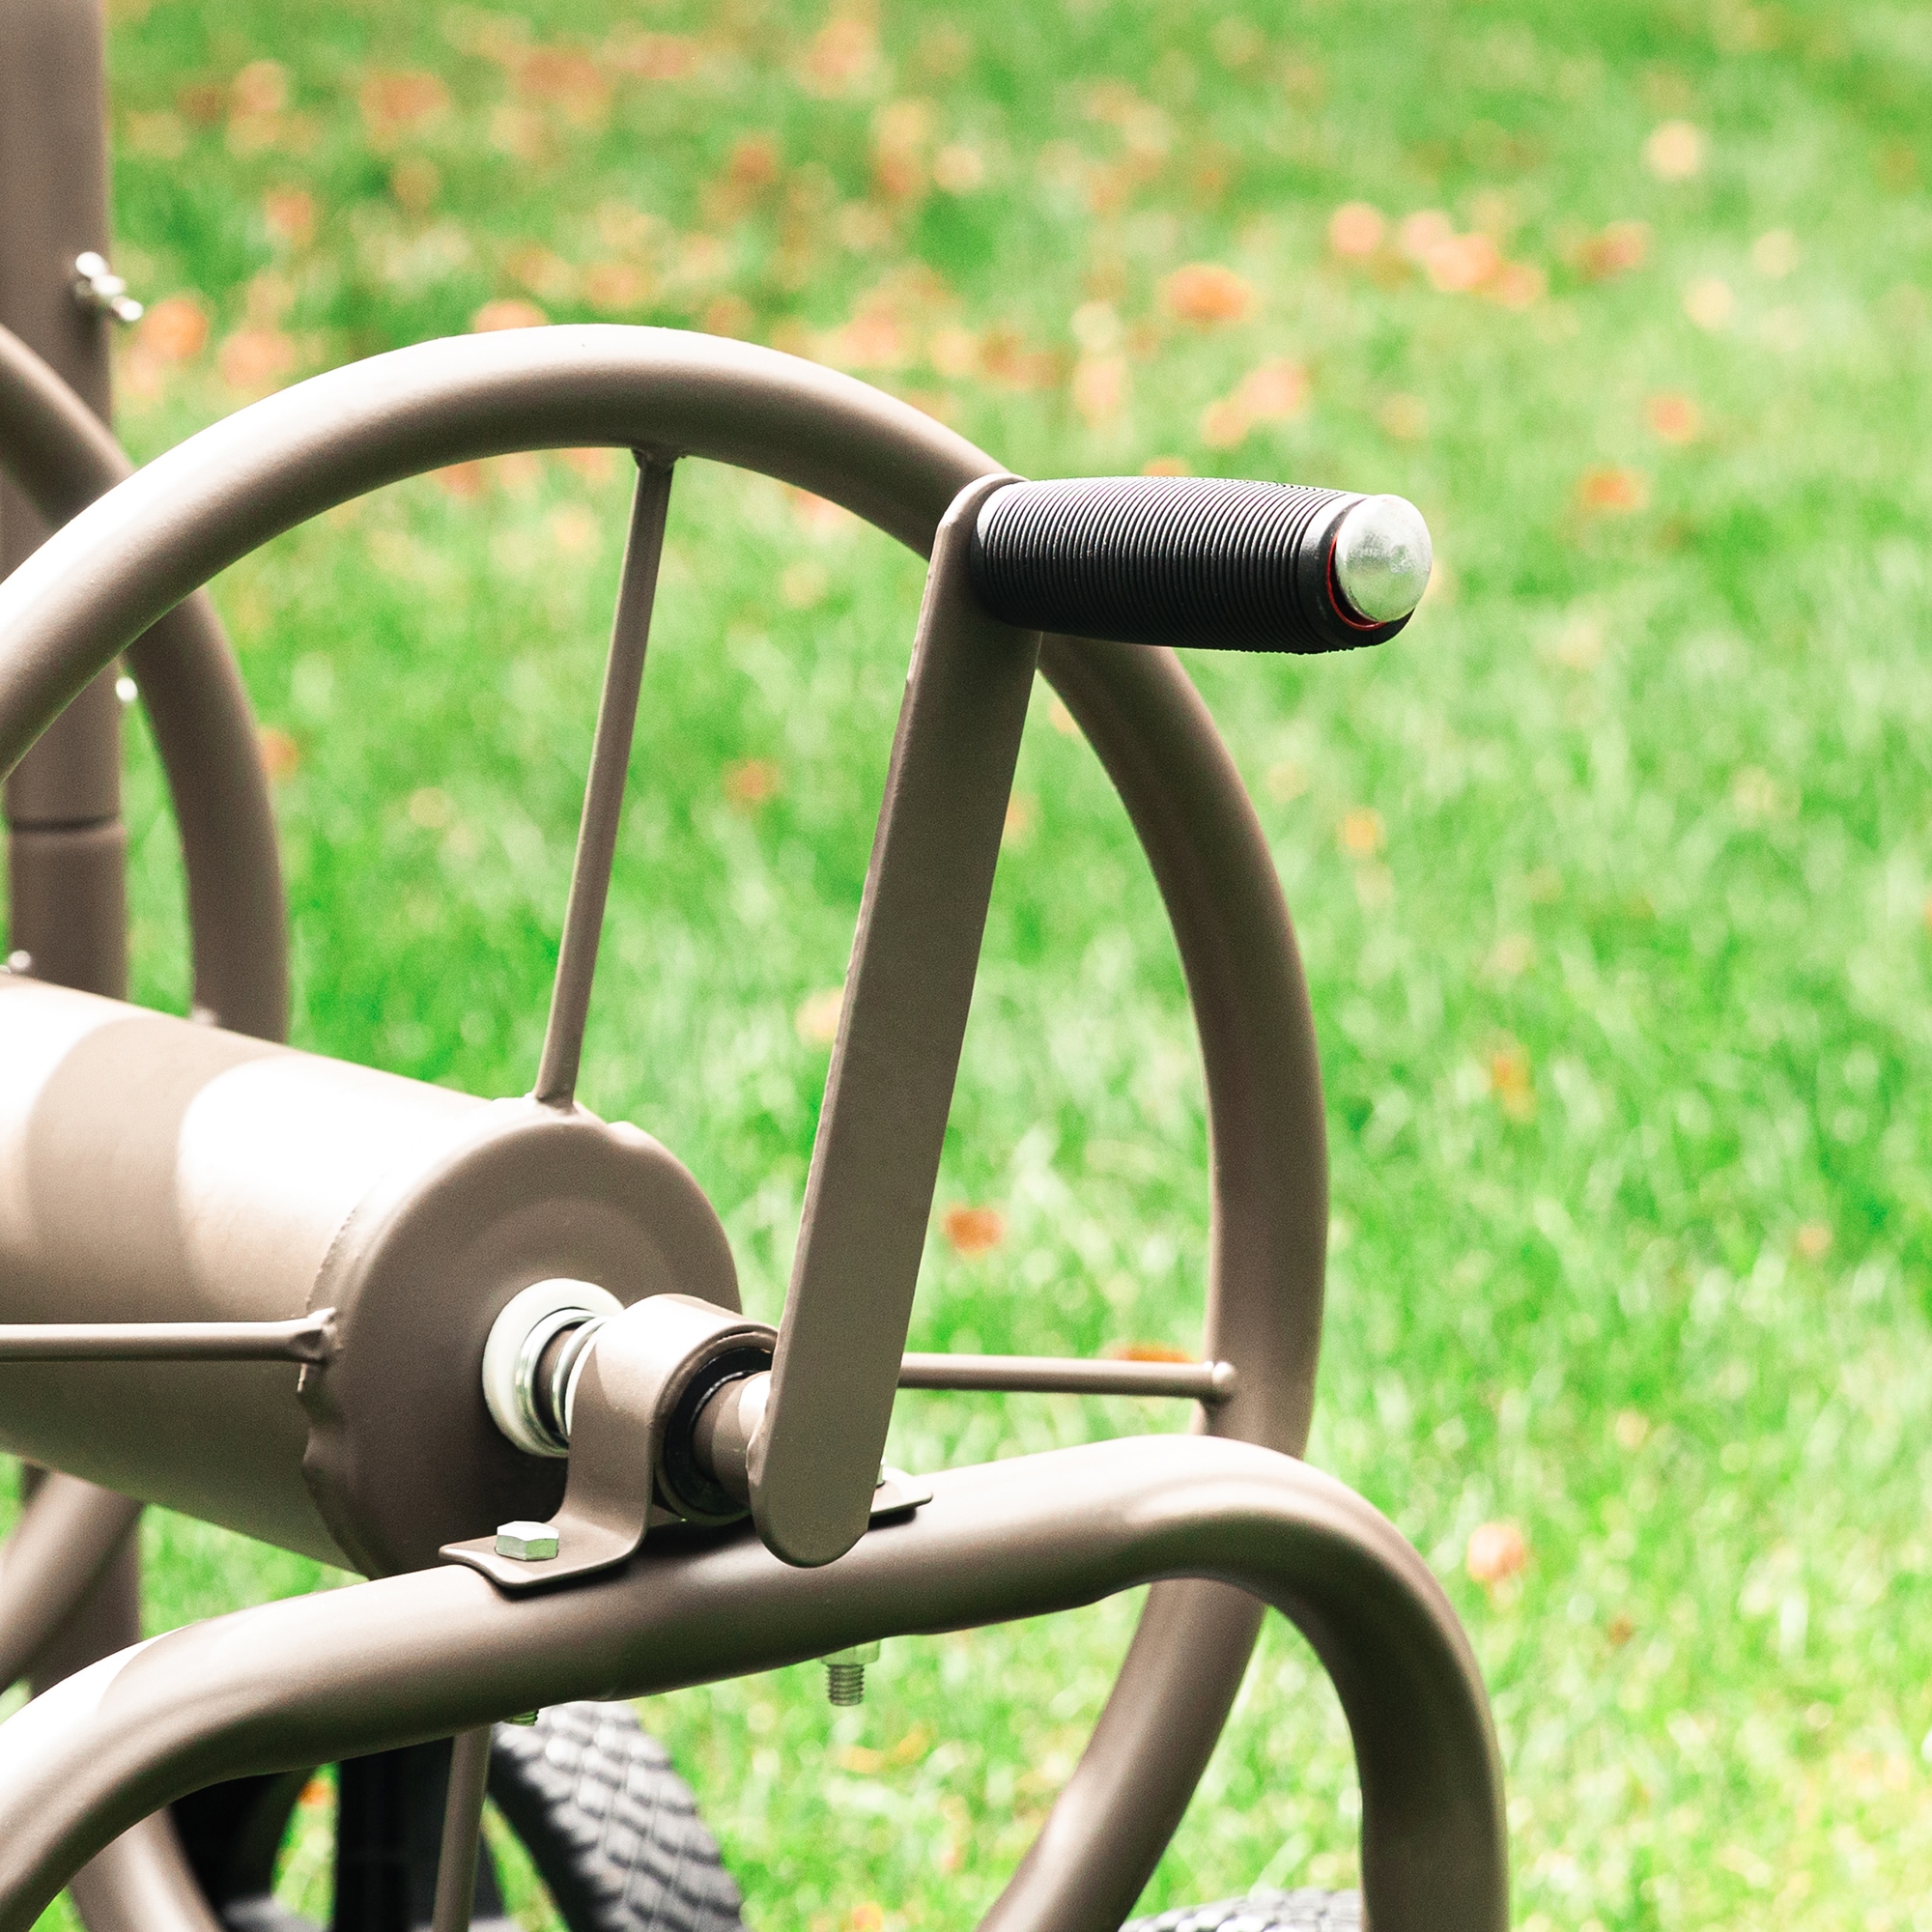 KAMMQI Hose Reel Cart - Portable Garden Hose Reel Cart Outdoor